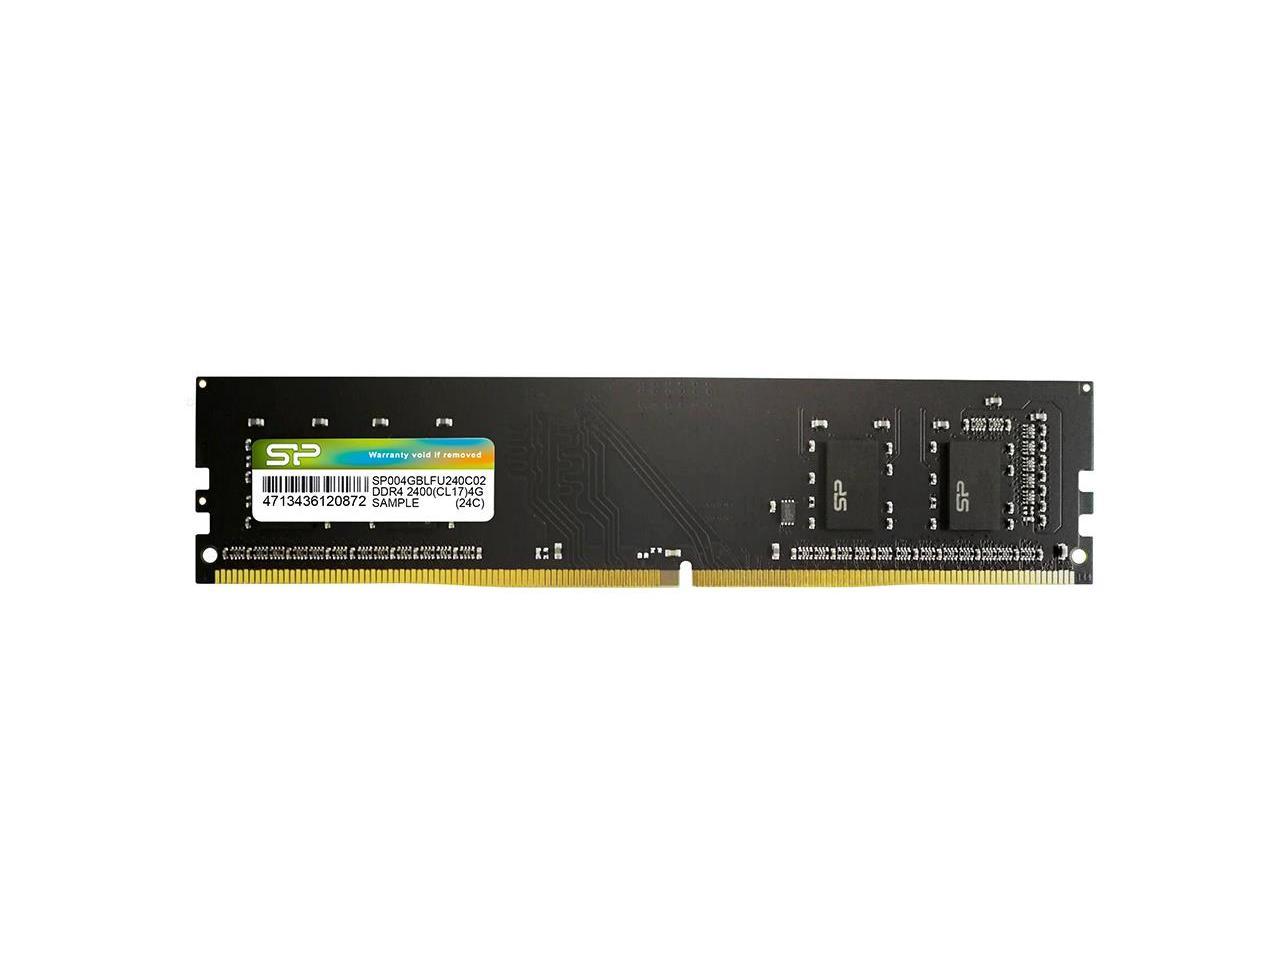 4GB Silicon Power DDR4 2400MHz PC4-19200 Desktop Memory Module CL17 288 pins